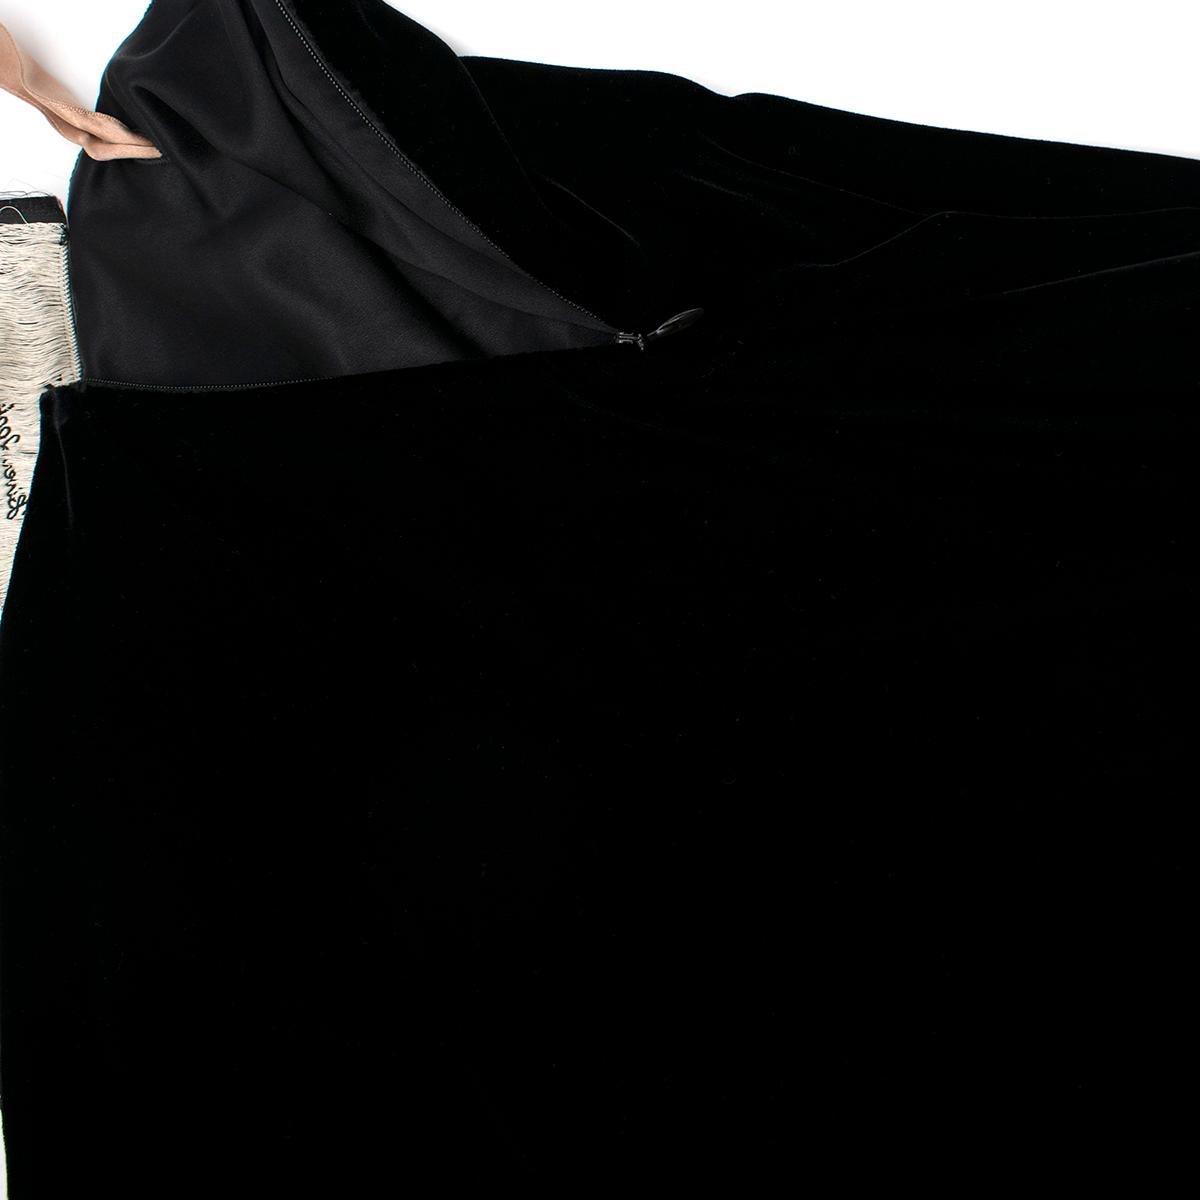 Lanvin by Alber Elbaz Black Velour Asymmetric Dress - Size US 4 For Sale 2